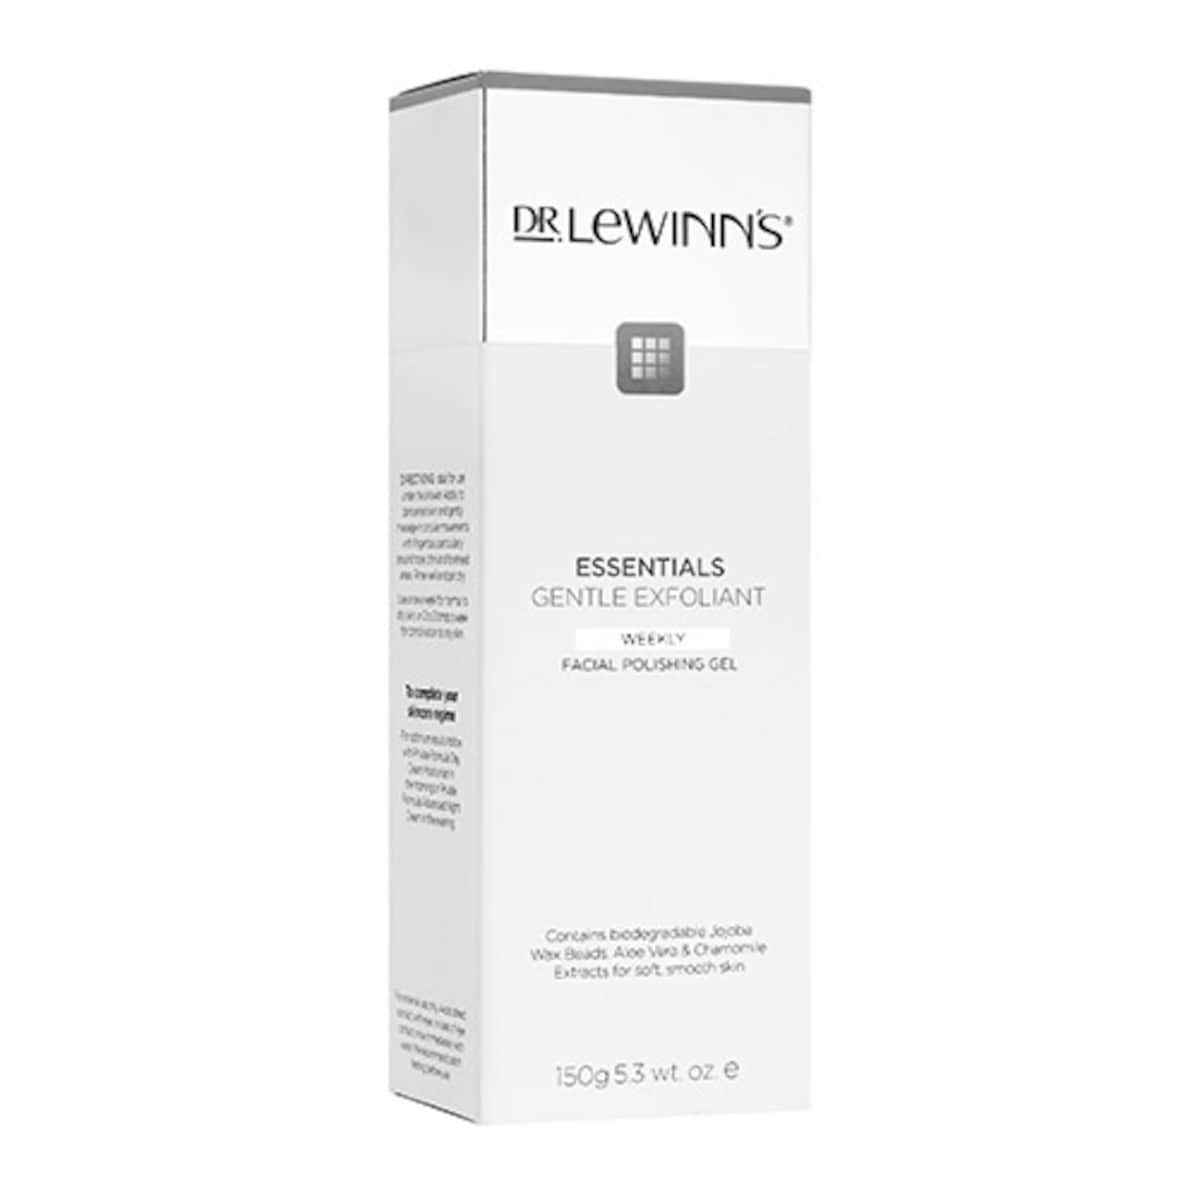 Dr Lewinns Facial Polishing Gel Gentle Exfoliant 150g